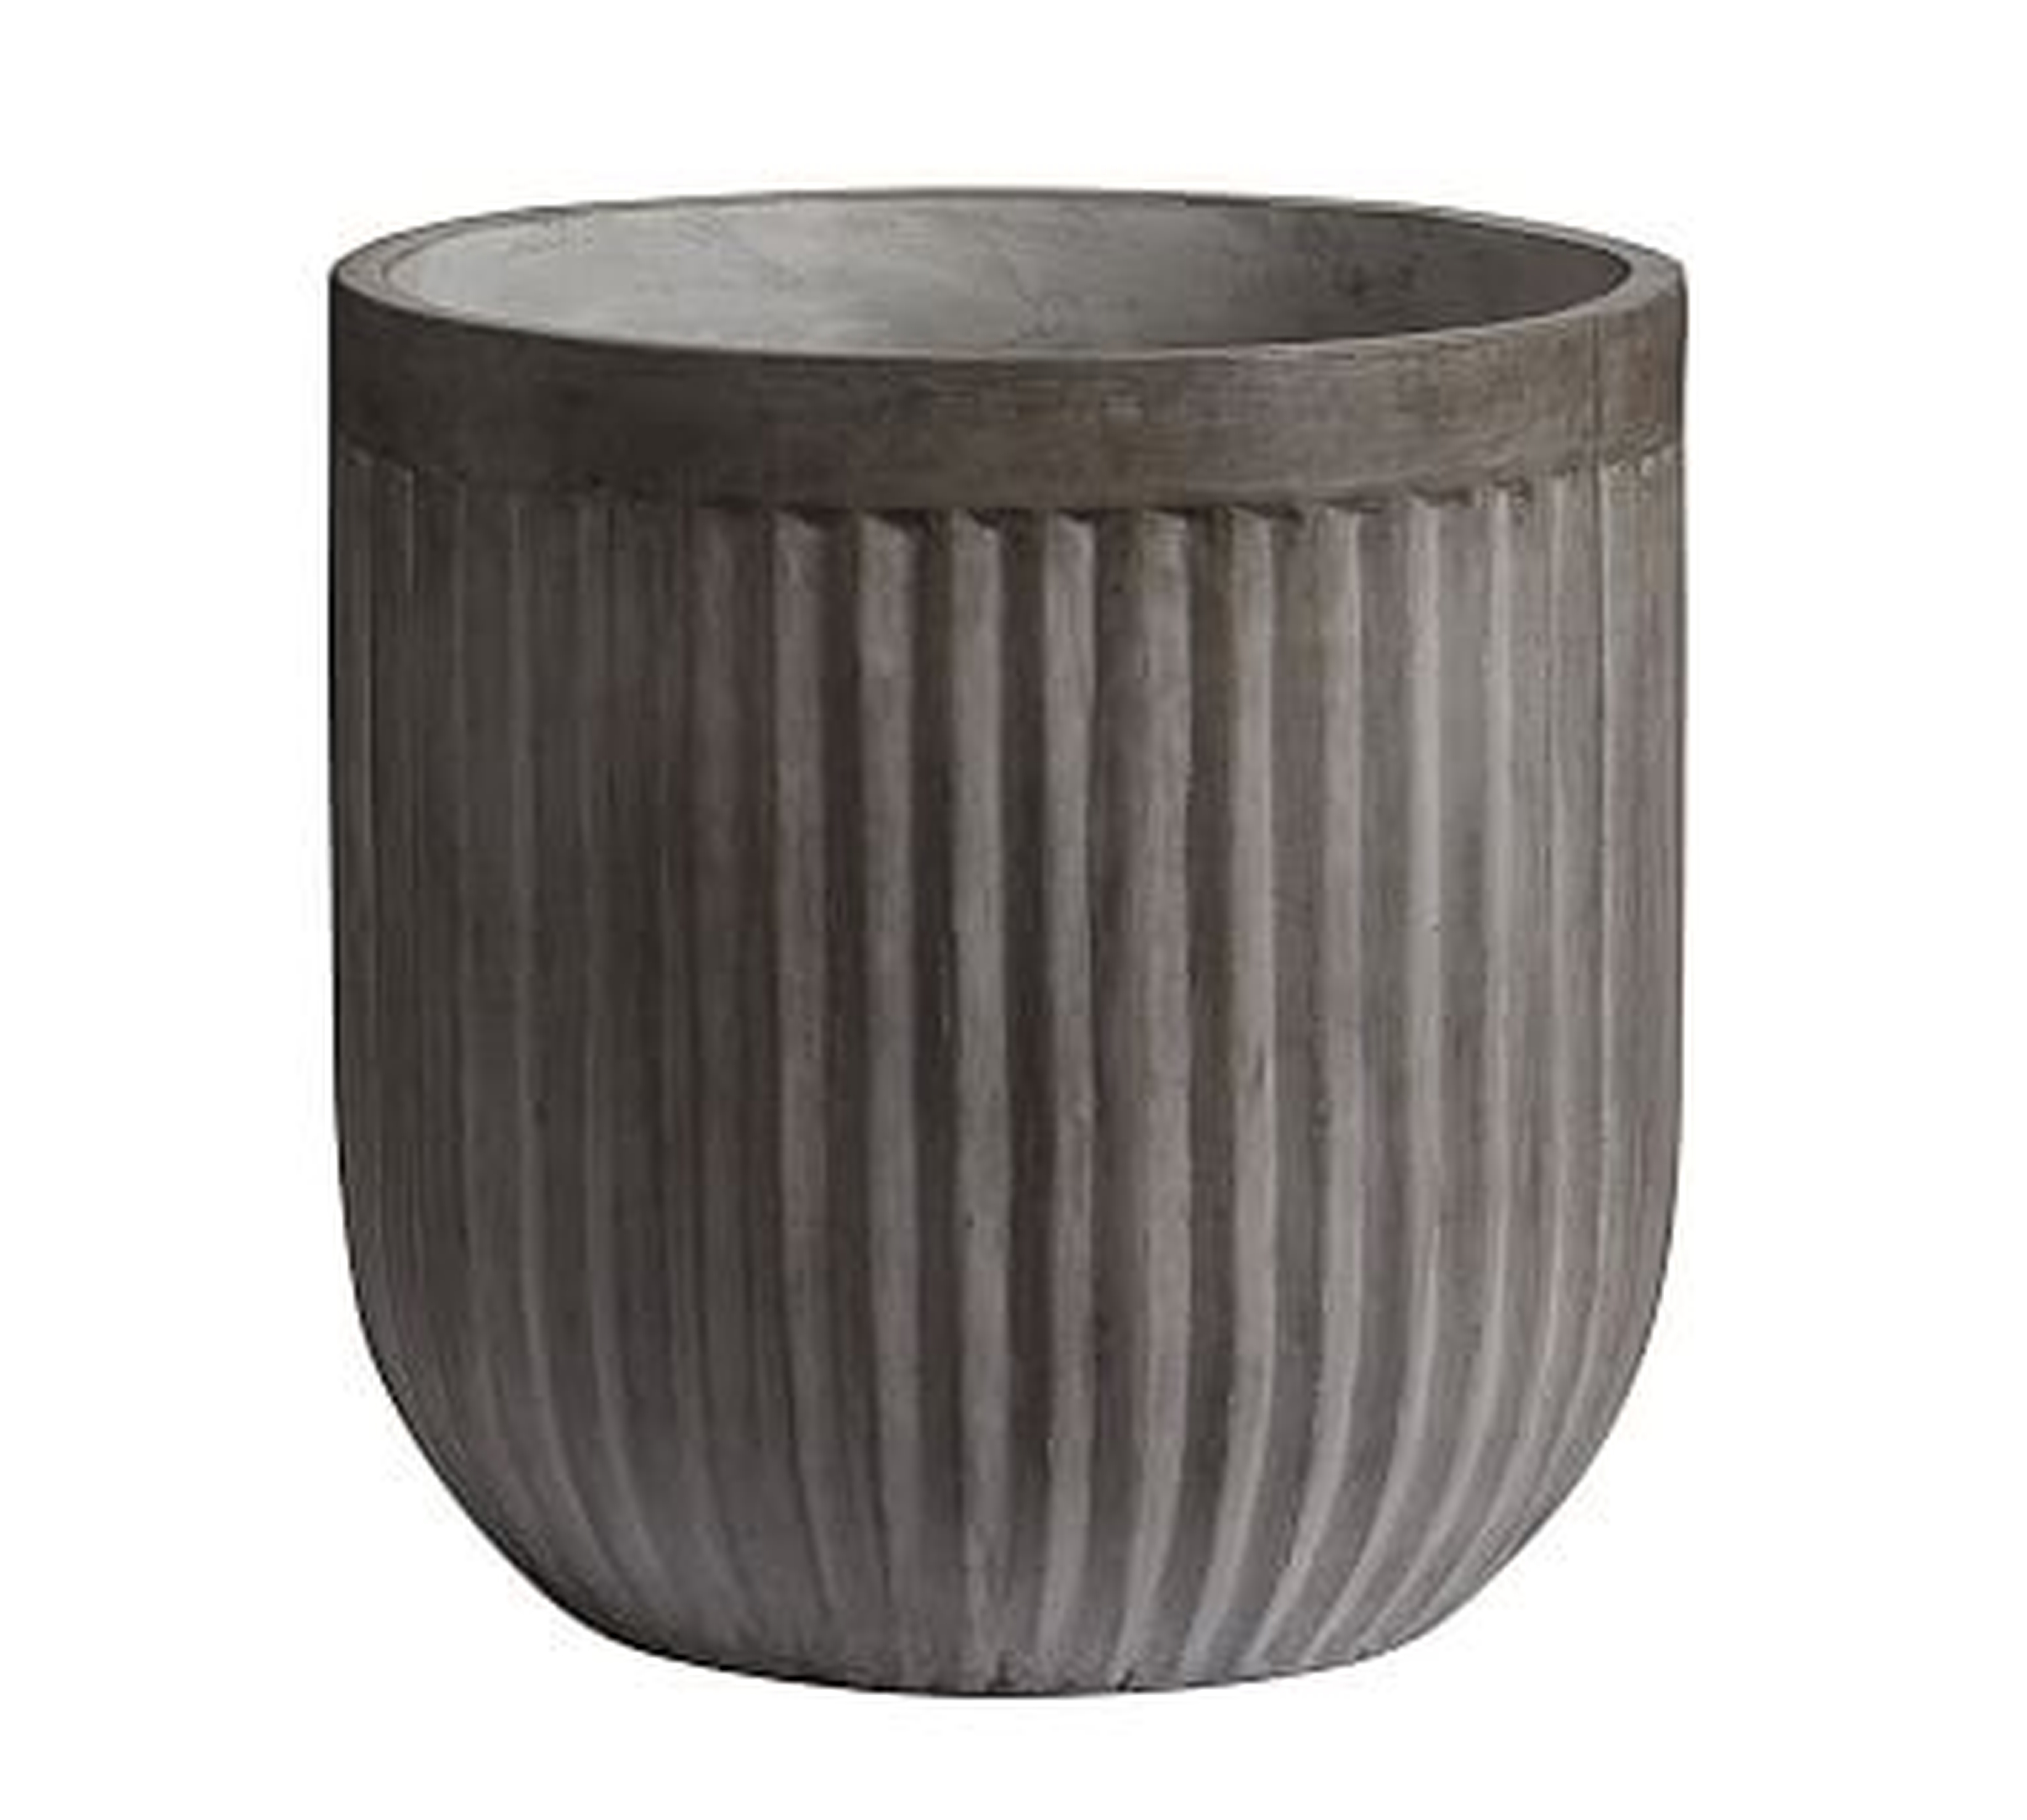 Concrete Fluted Planter, Grey, 19.75" Diam. x 19.75" H - Pottery Barn